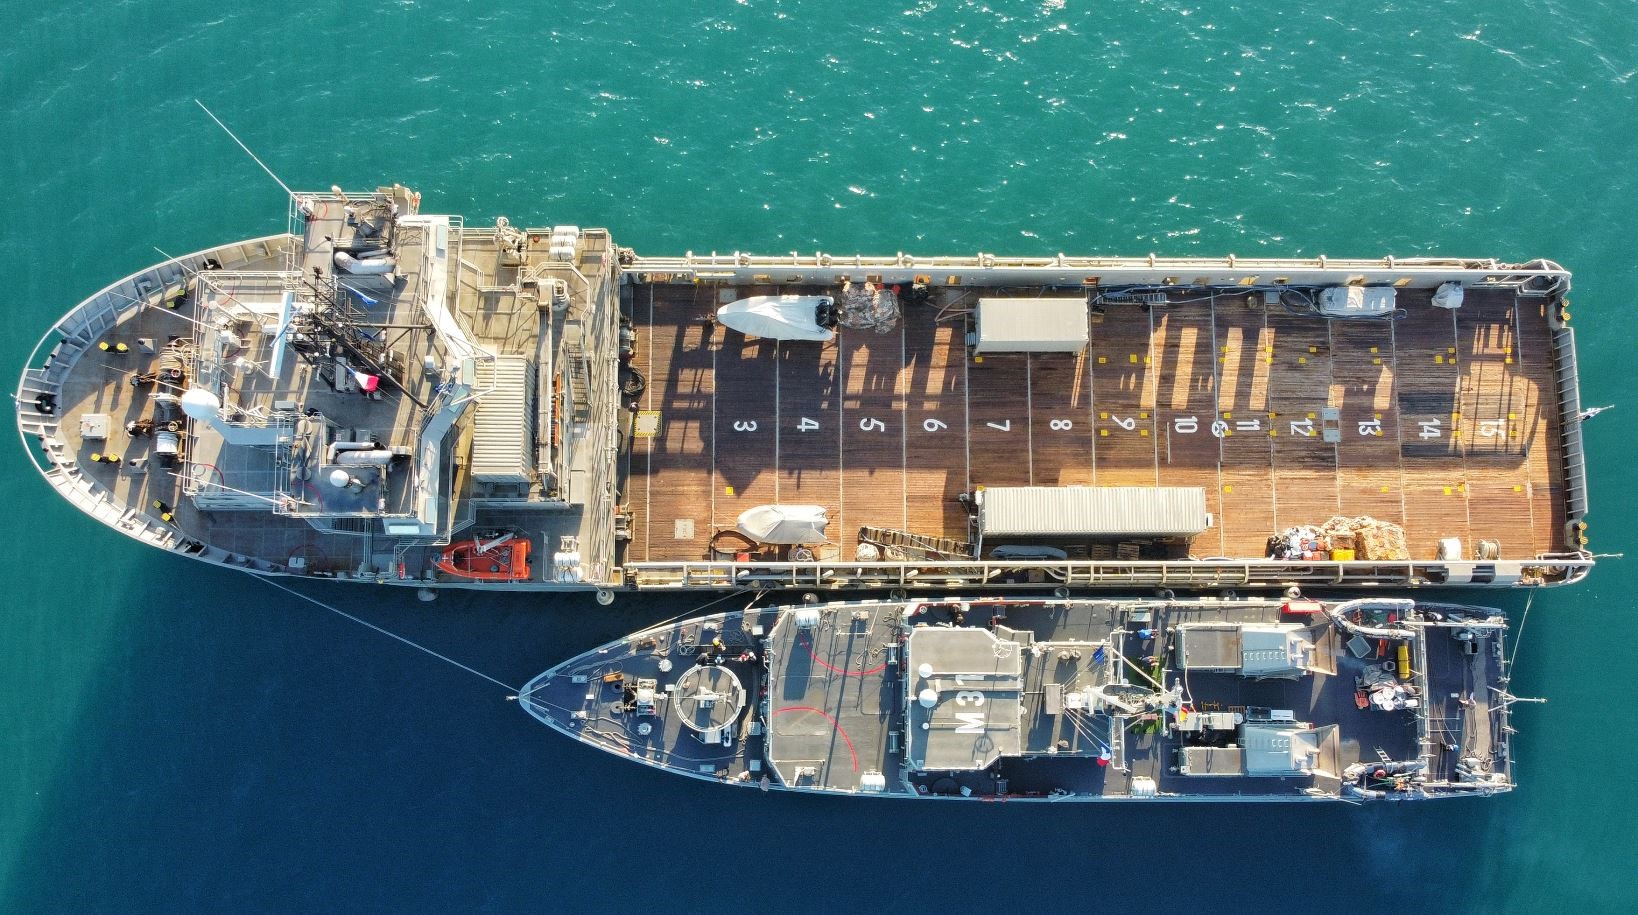 Minehunter M-31 'Segura' docked to its command vessel for fuel supply